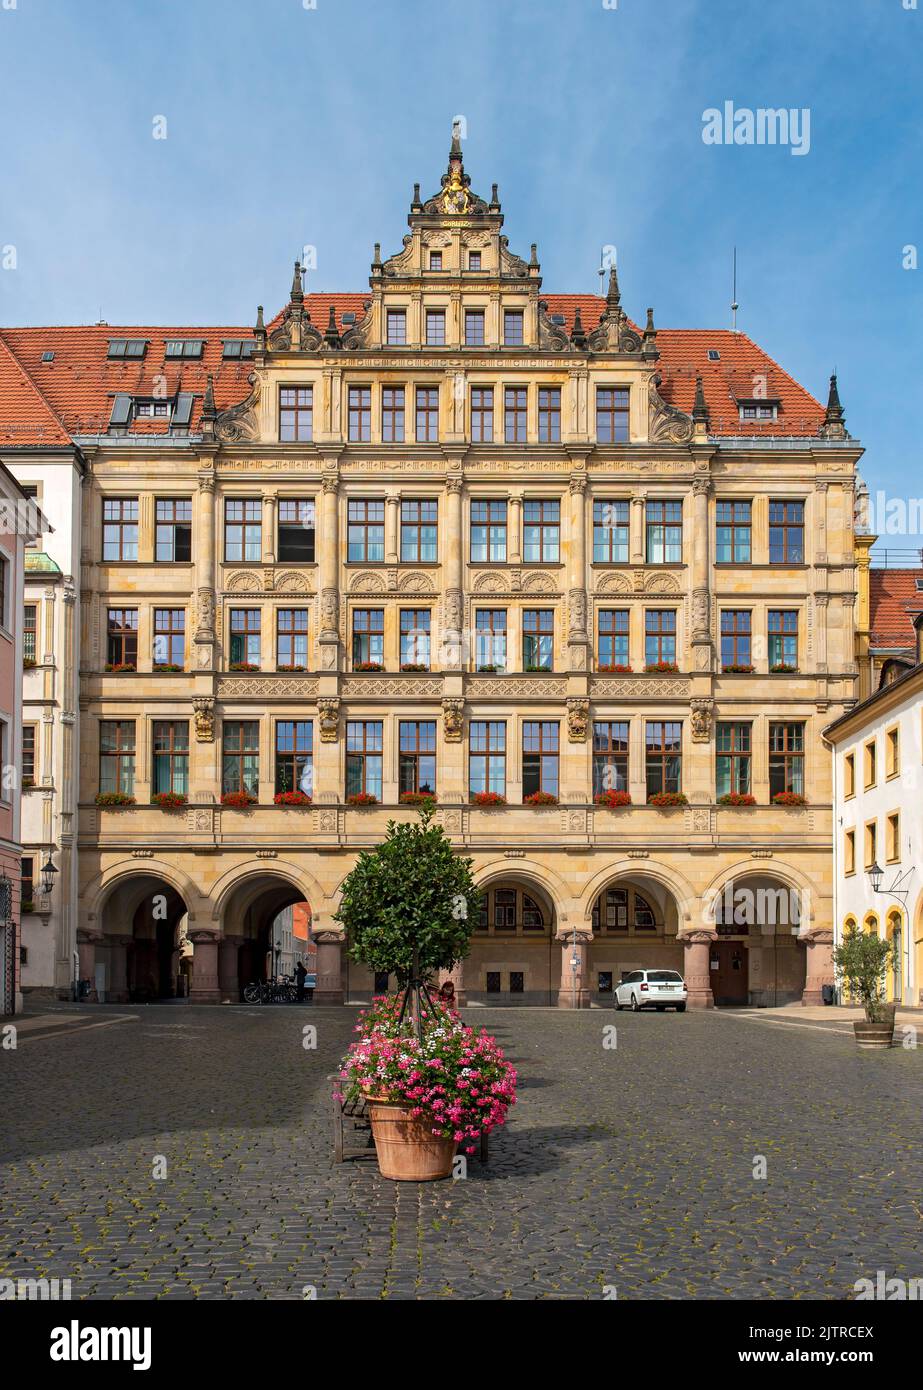 Nouvel hôtel de ville (mairie), Untermarkt, Görlitz (Goerlitz), Allemagne Banque D'Images